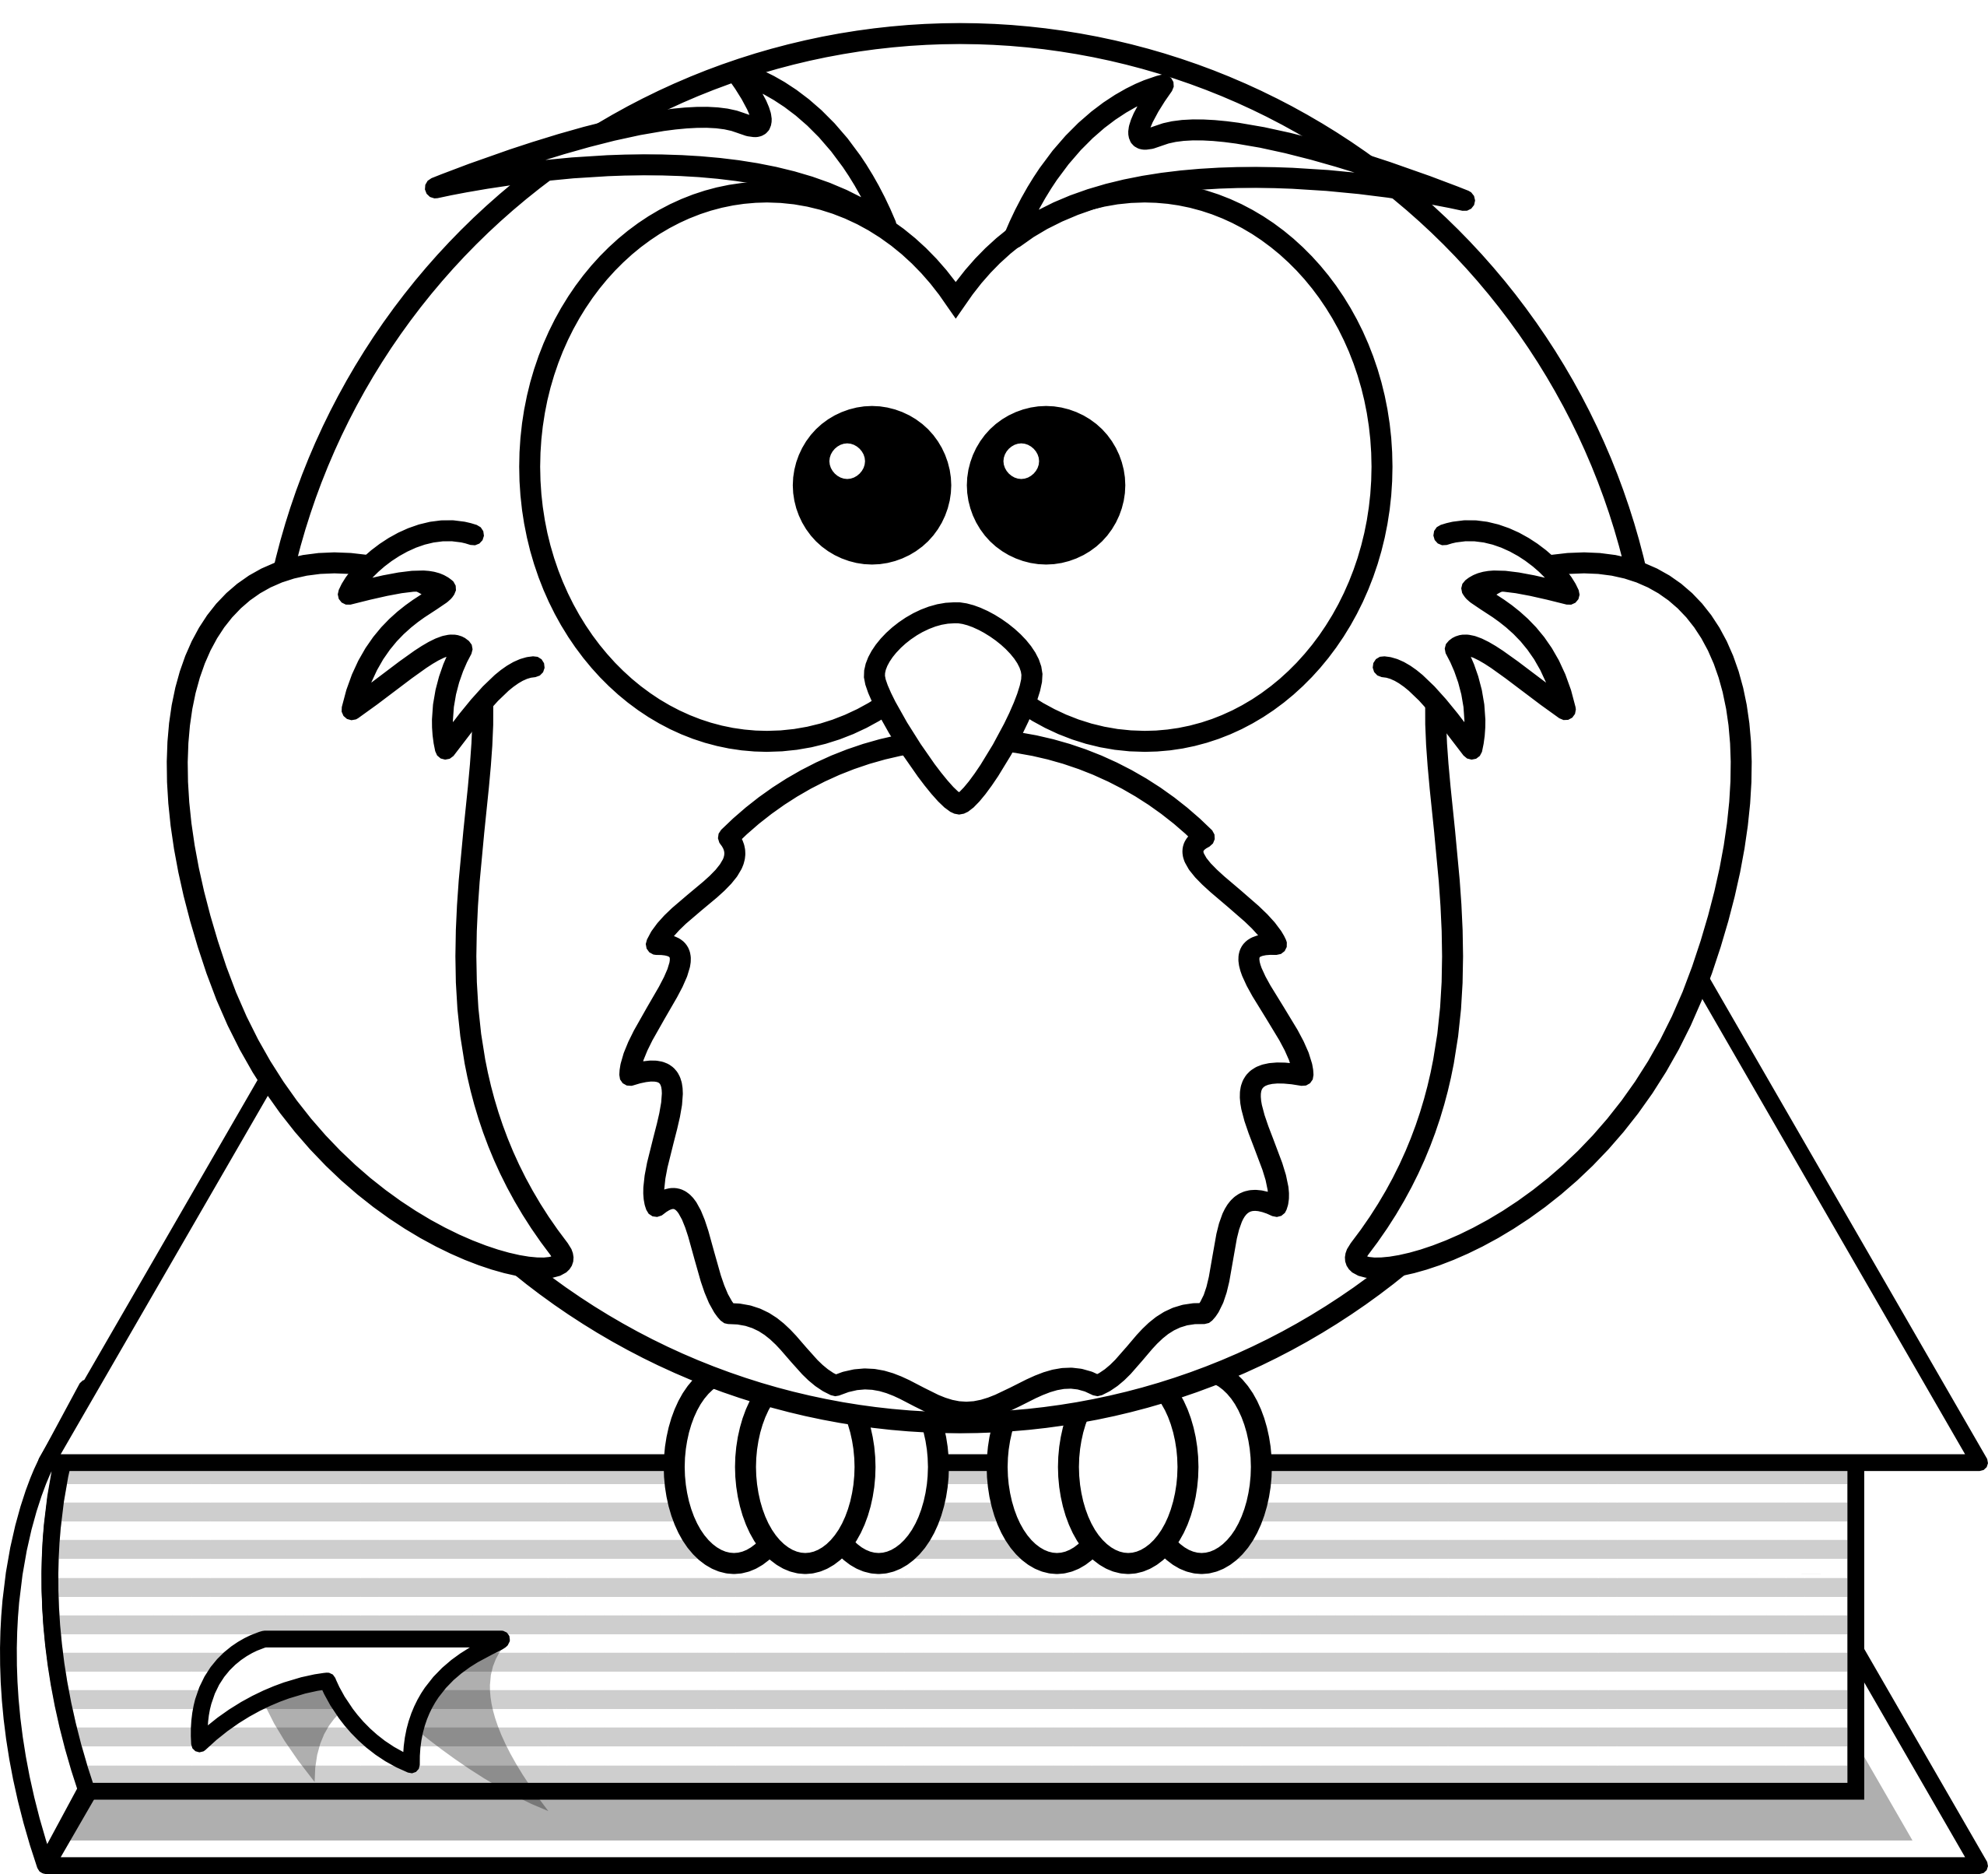 Clip Art: Lemmling Cartoon Owl Sitting on a Book ... - ClipArt ...